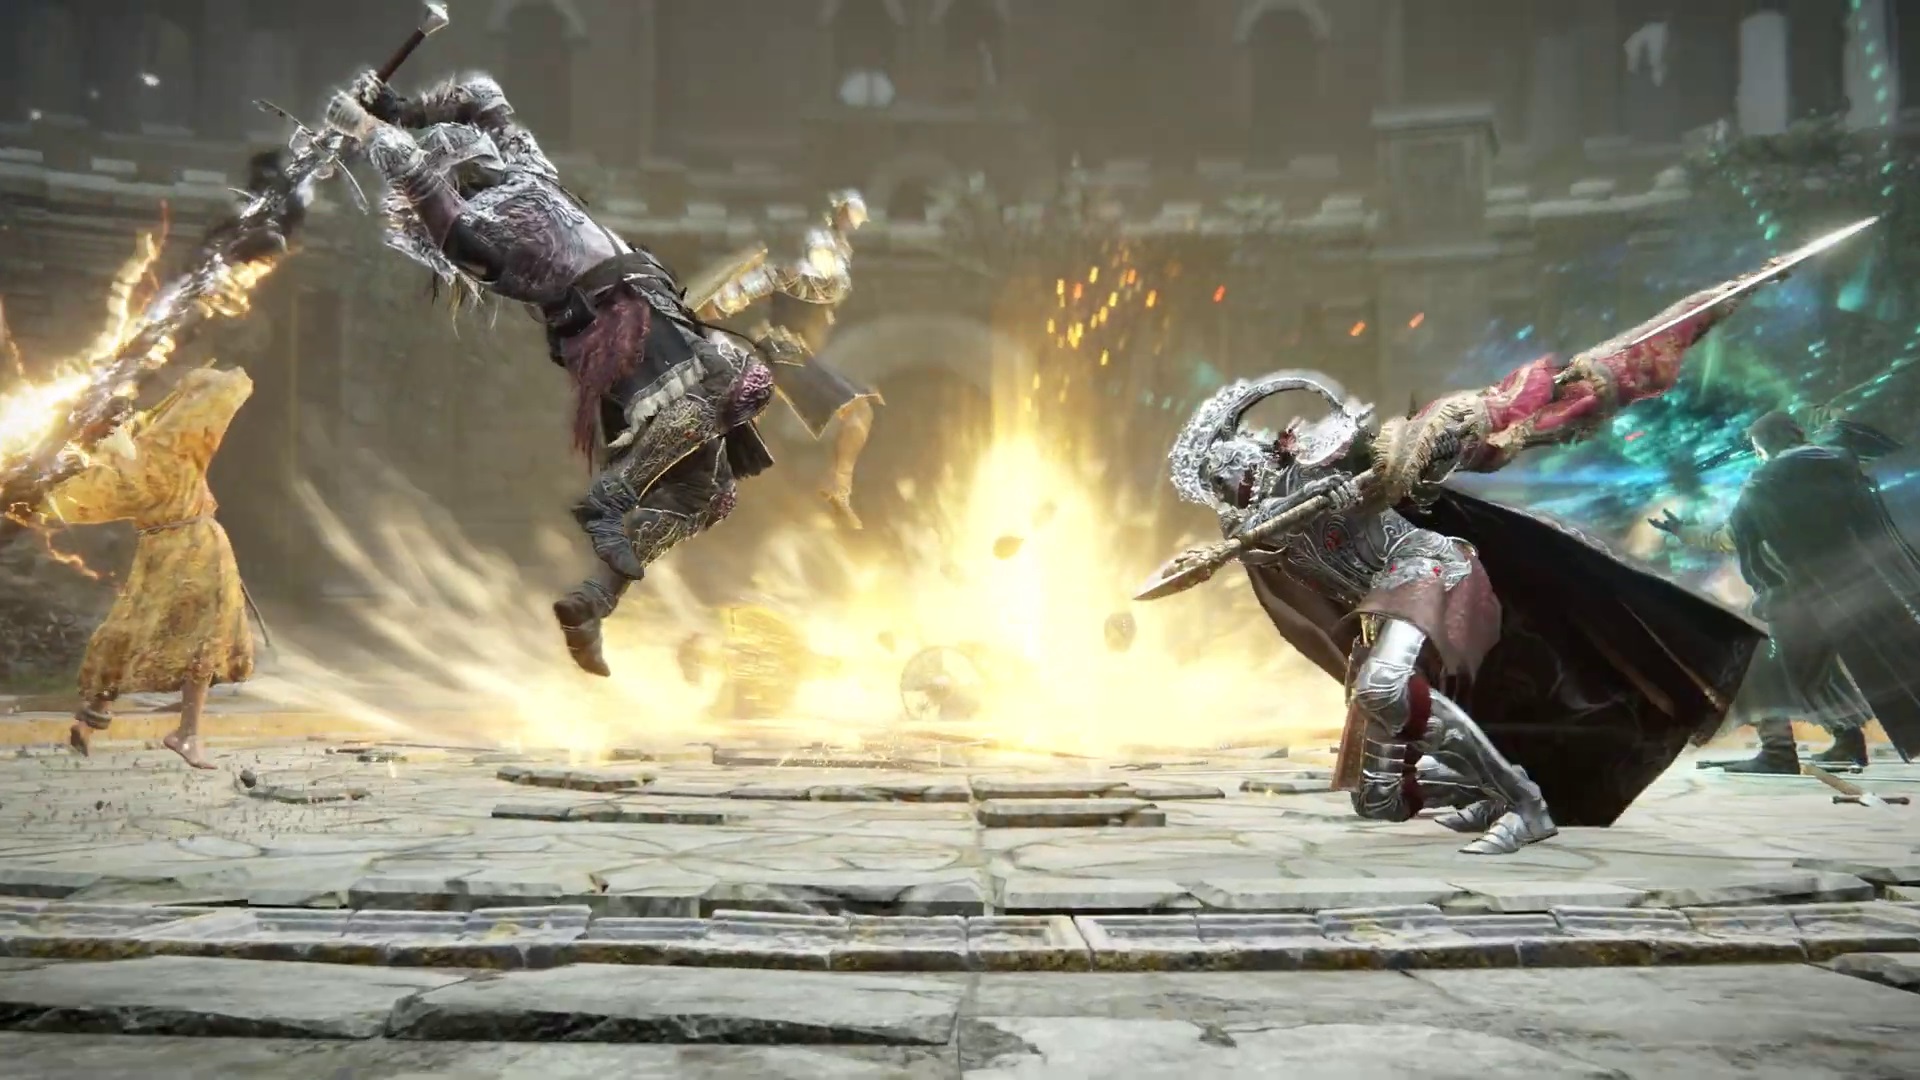 Elden Ring: Colosseum DLC trailer introduces PvP battles